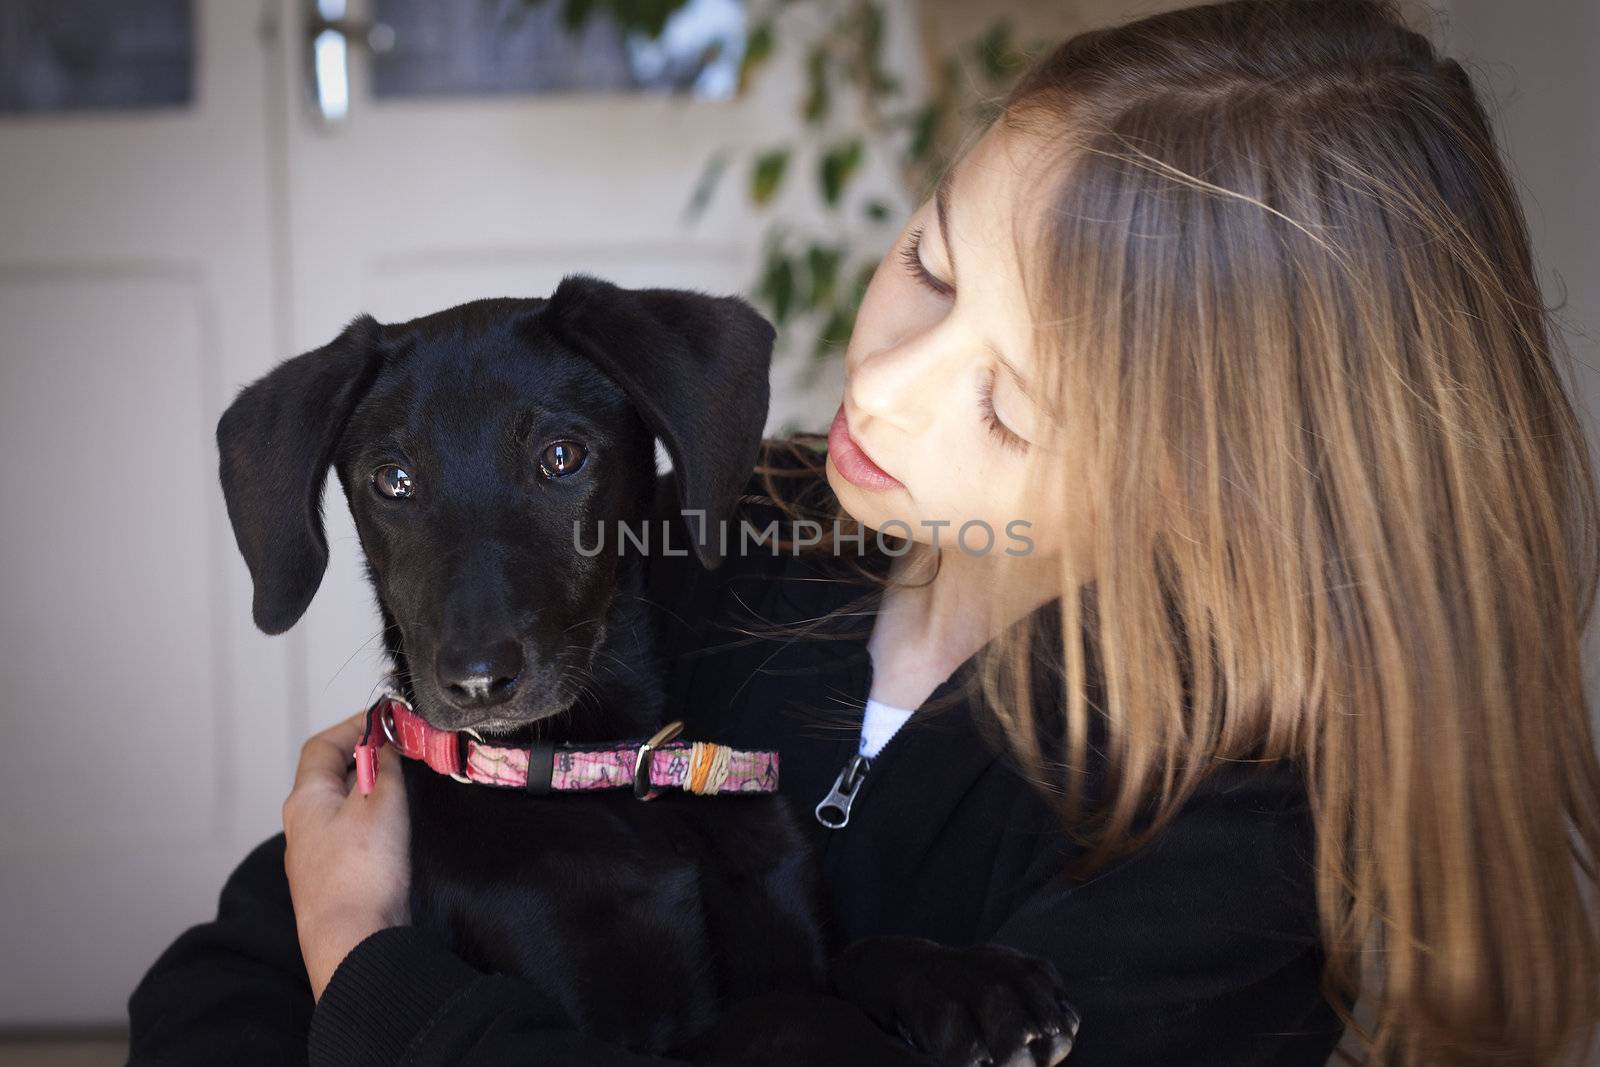 Child with adorable black dog. Soft focus, vignette